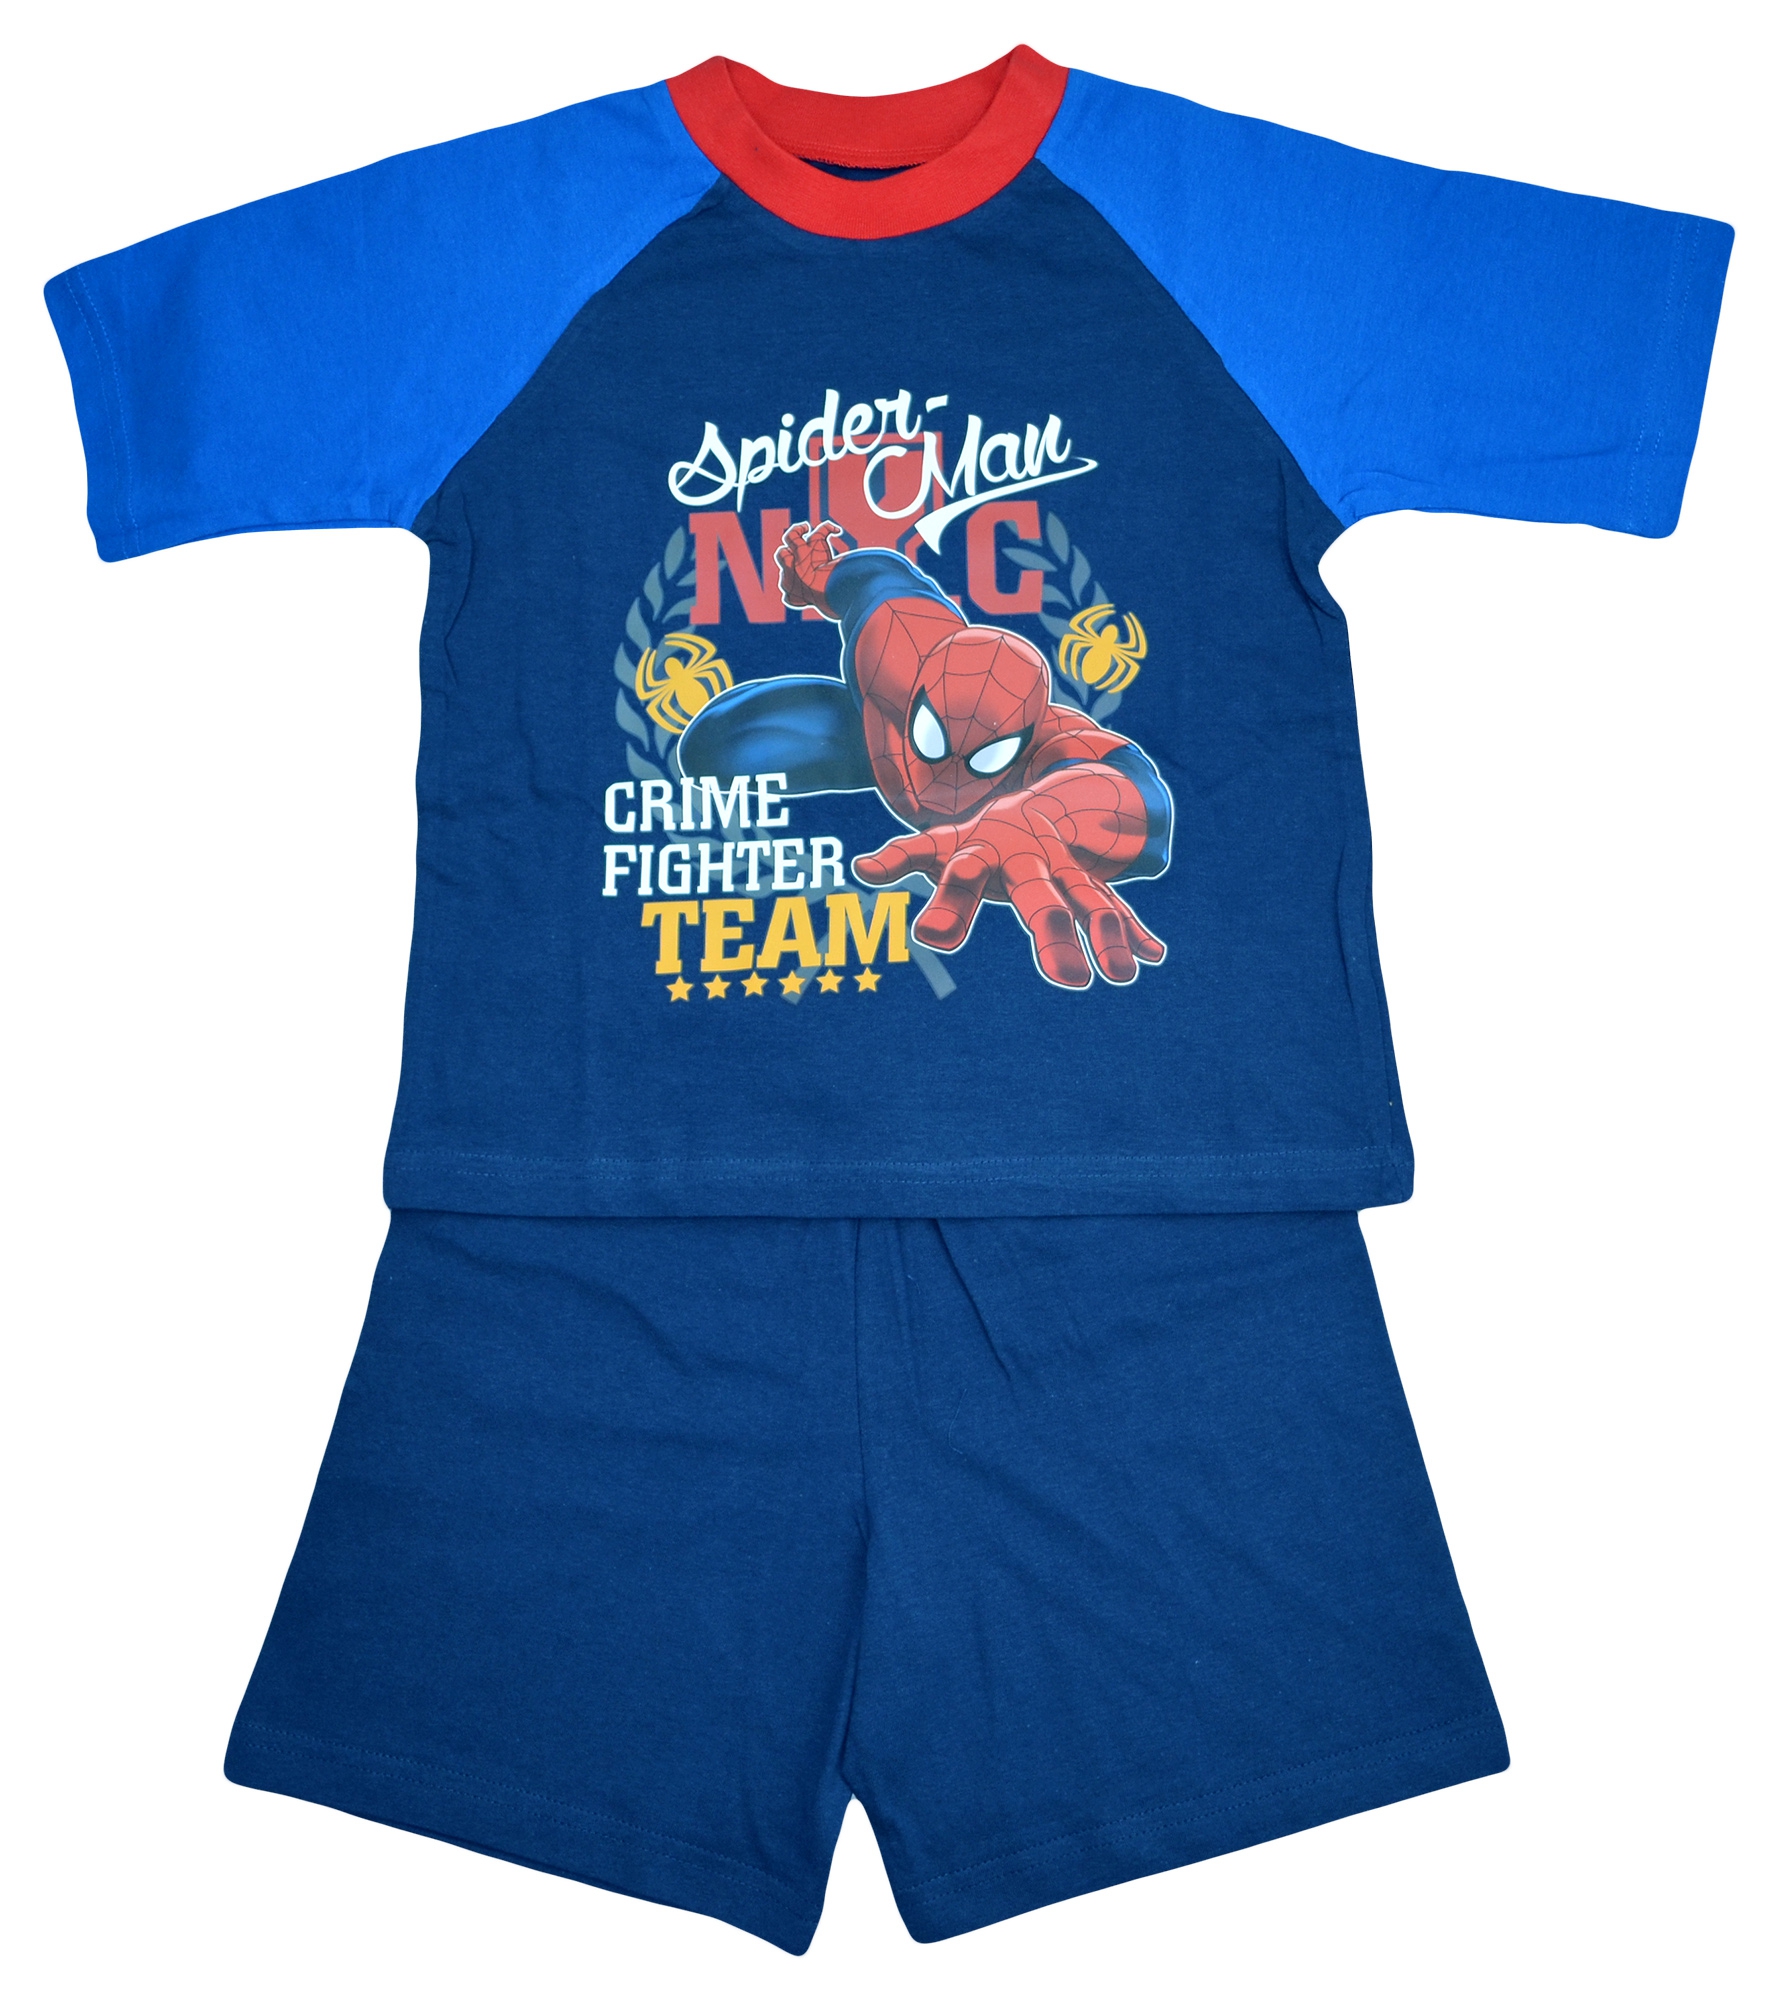 Spiderman 'Crime Fighter' Boys Short Pyjama Set 7-8 Years